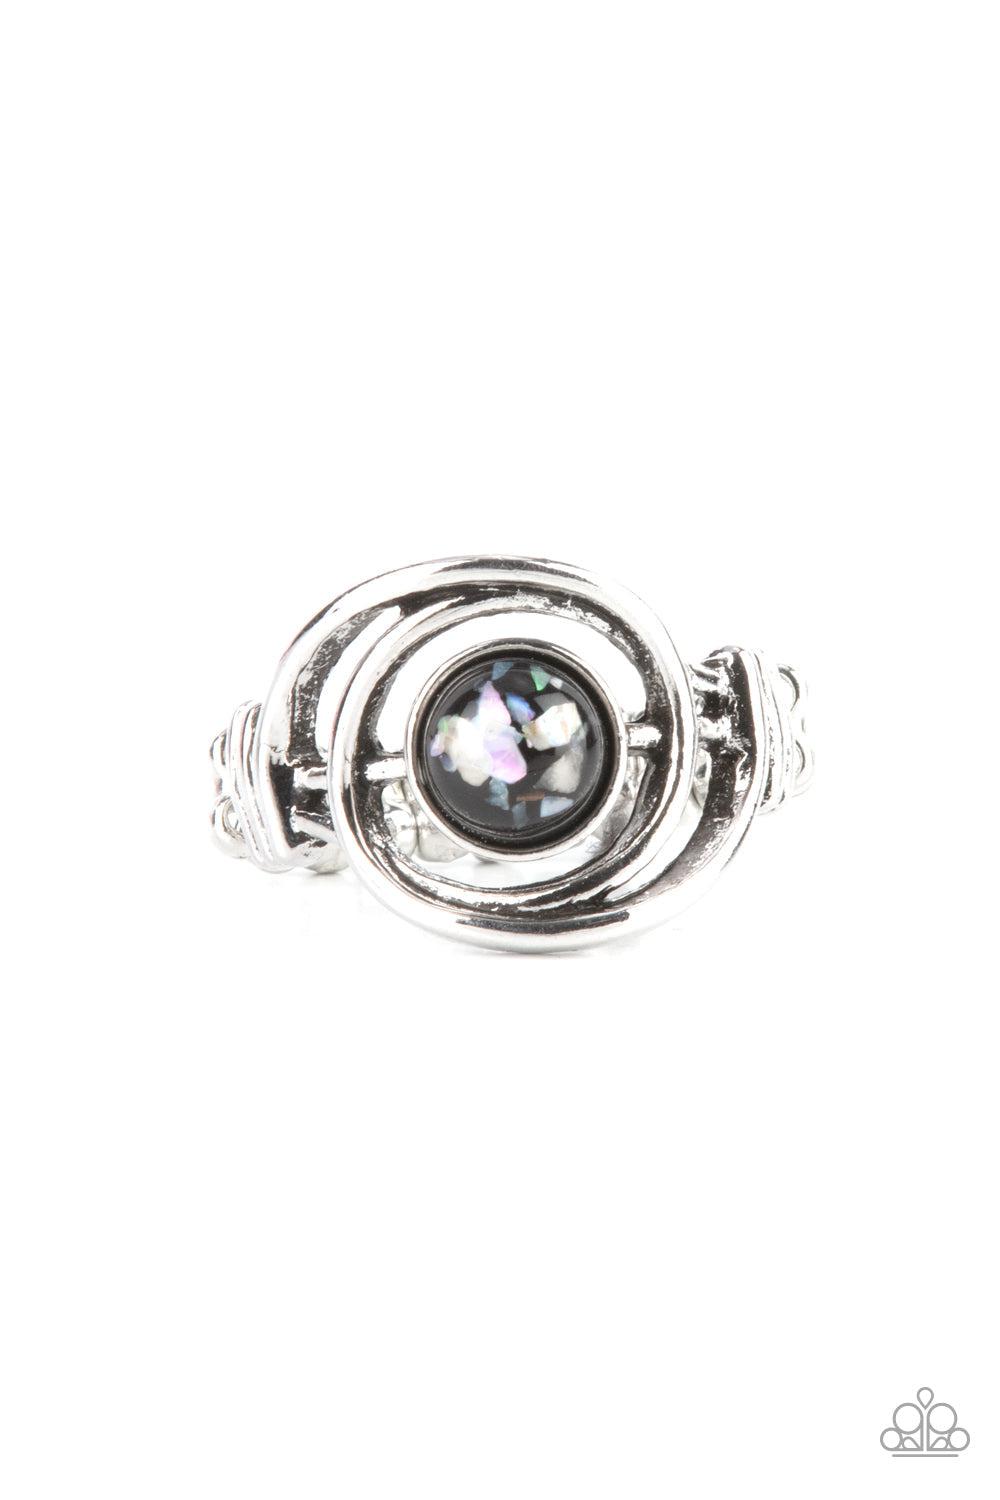 Celestial Karma Black Ring - Paparazzi Accessories- lightbox - CarasShop.com - $5 Jewelry by Cara Jewels